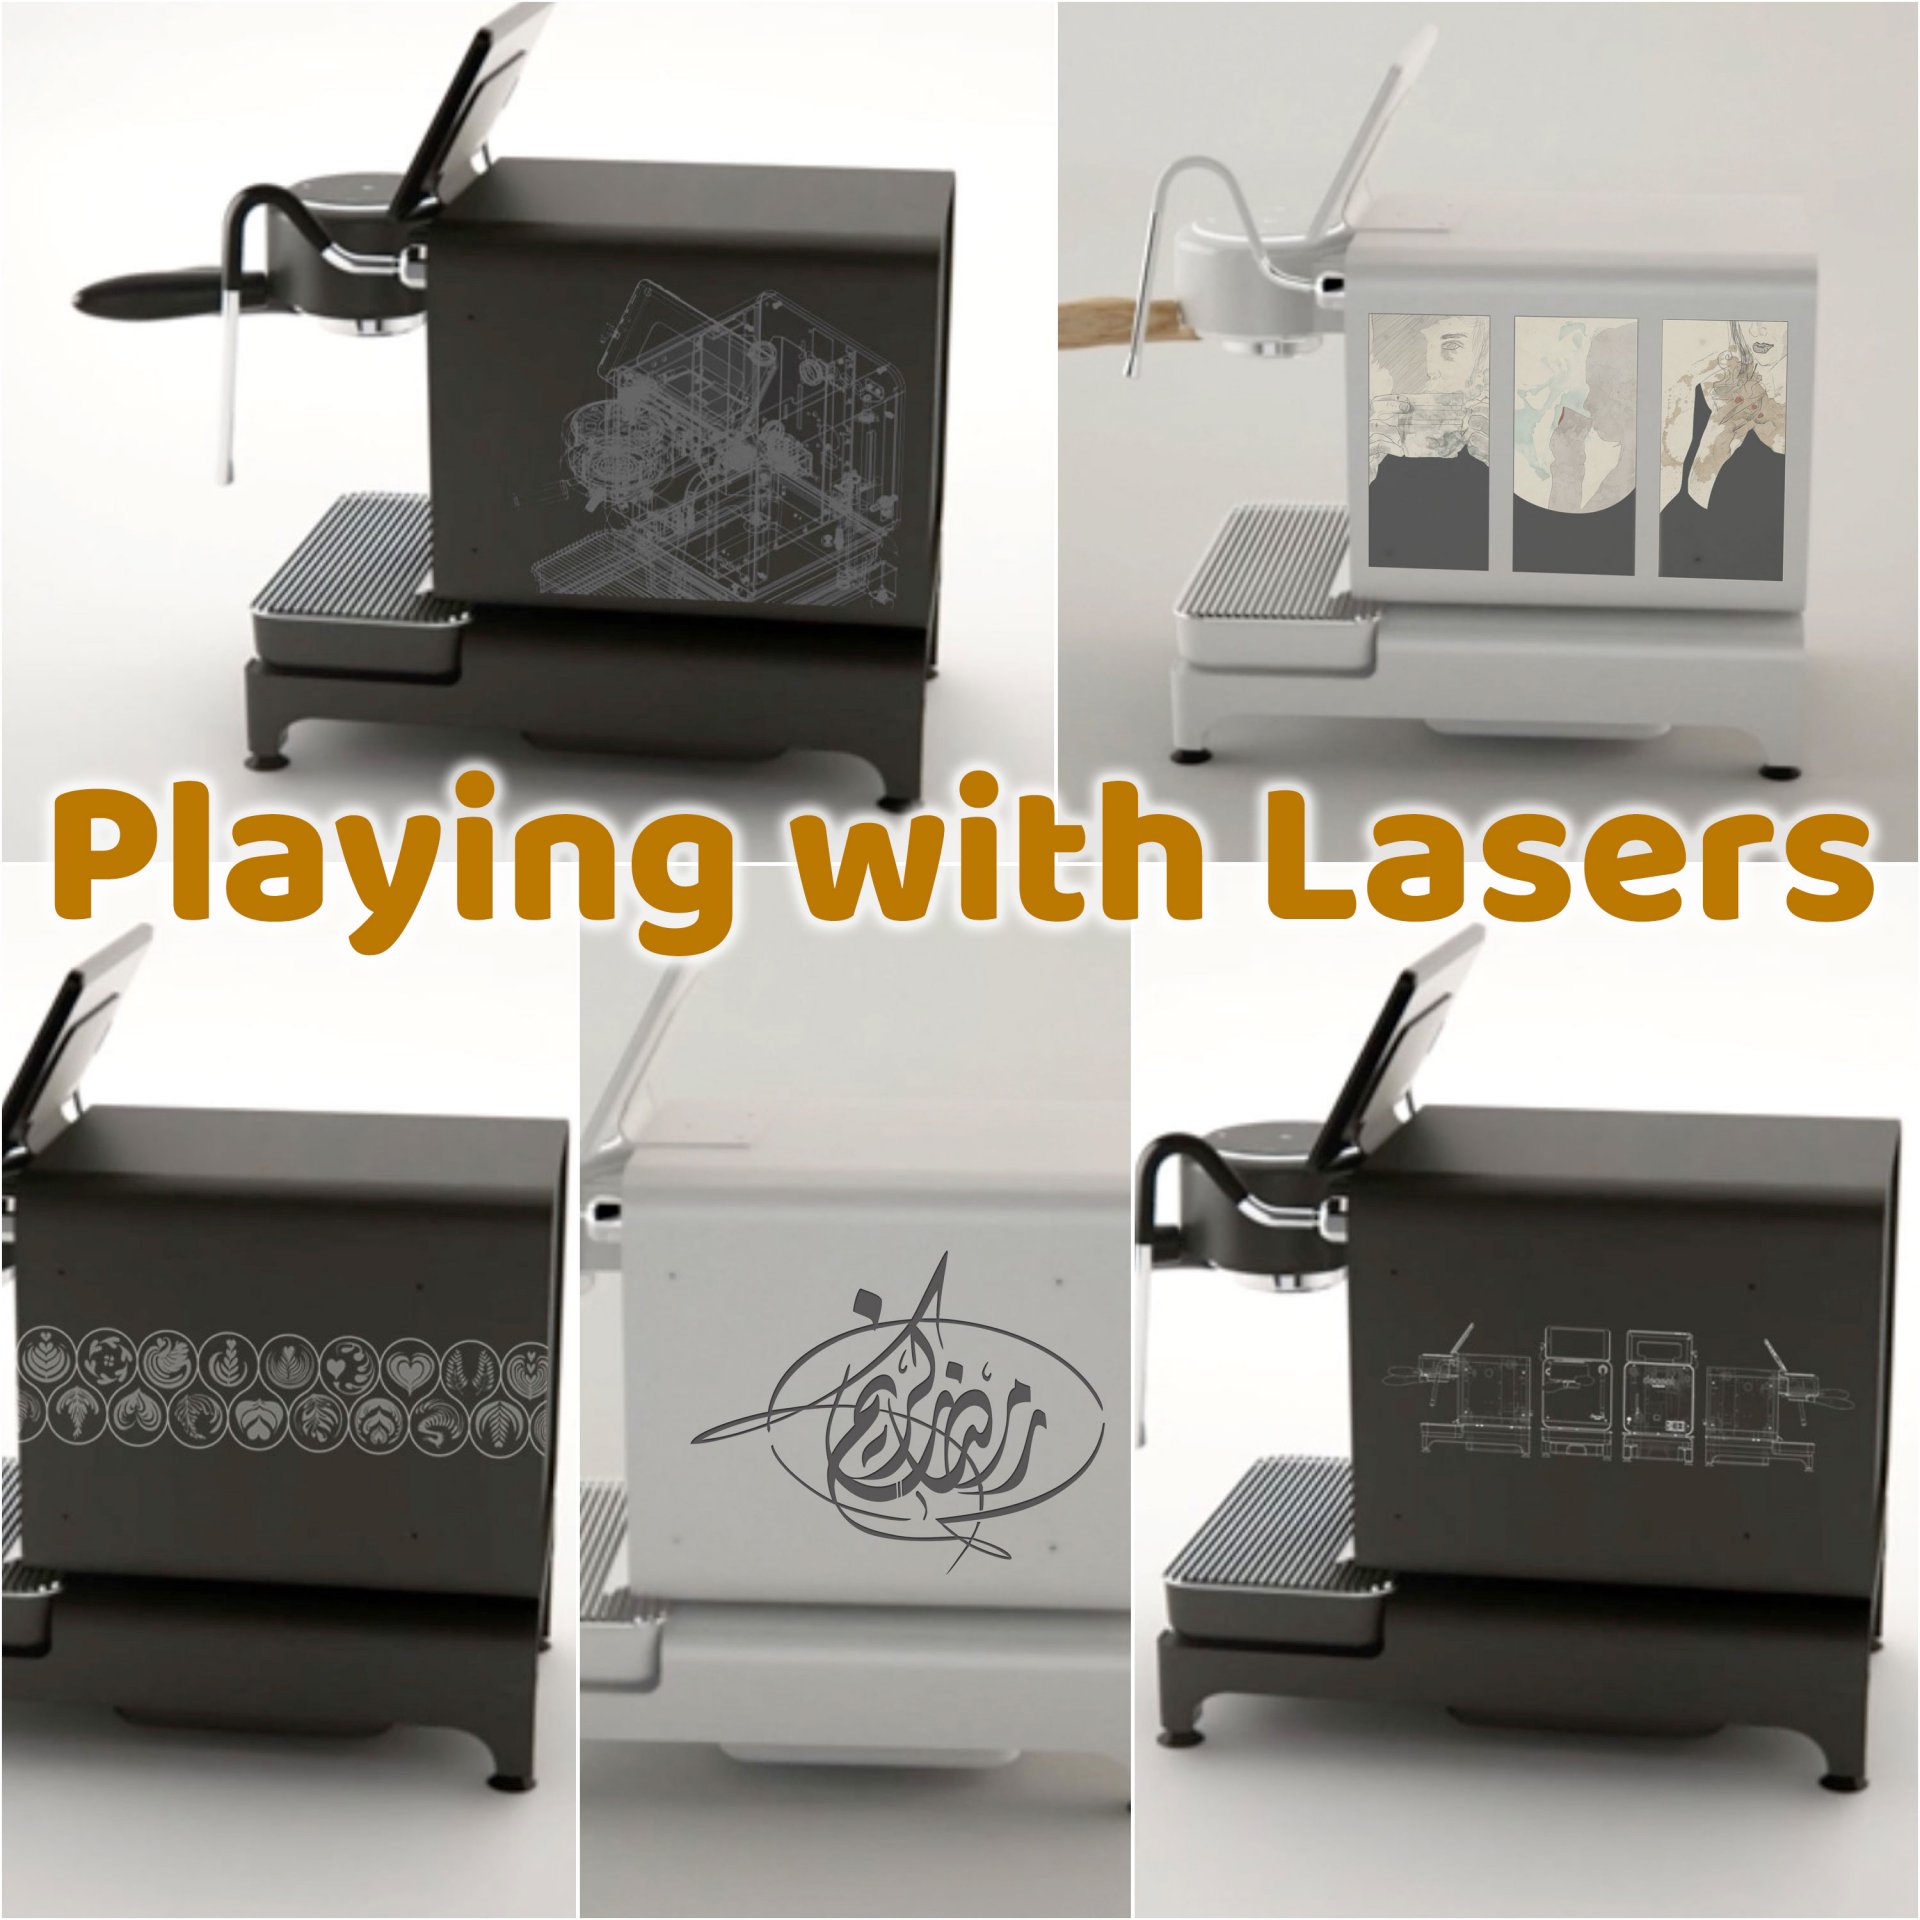 laser-experiments2.jpg